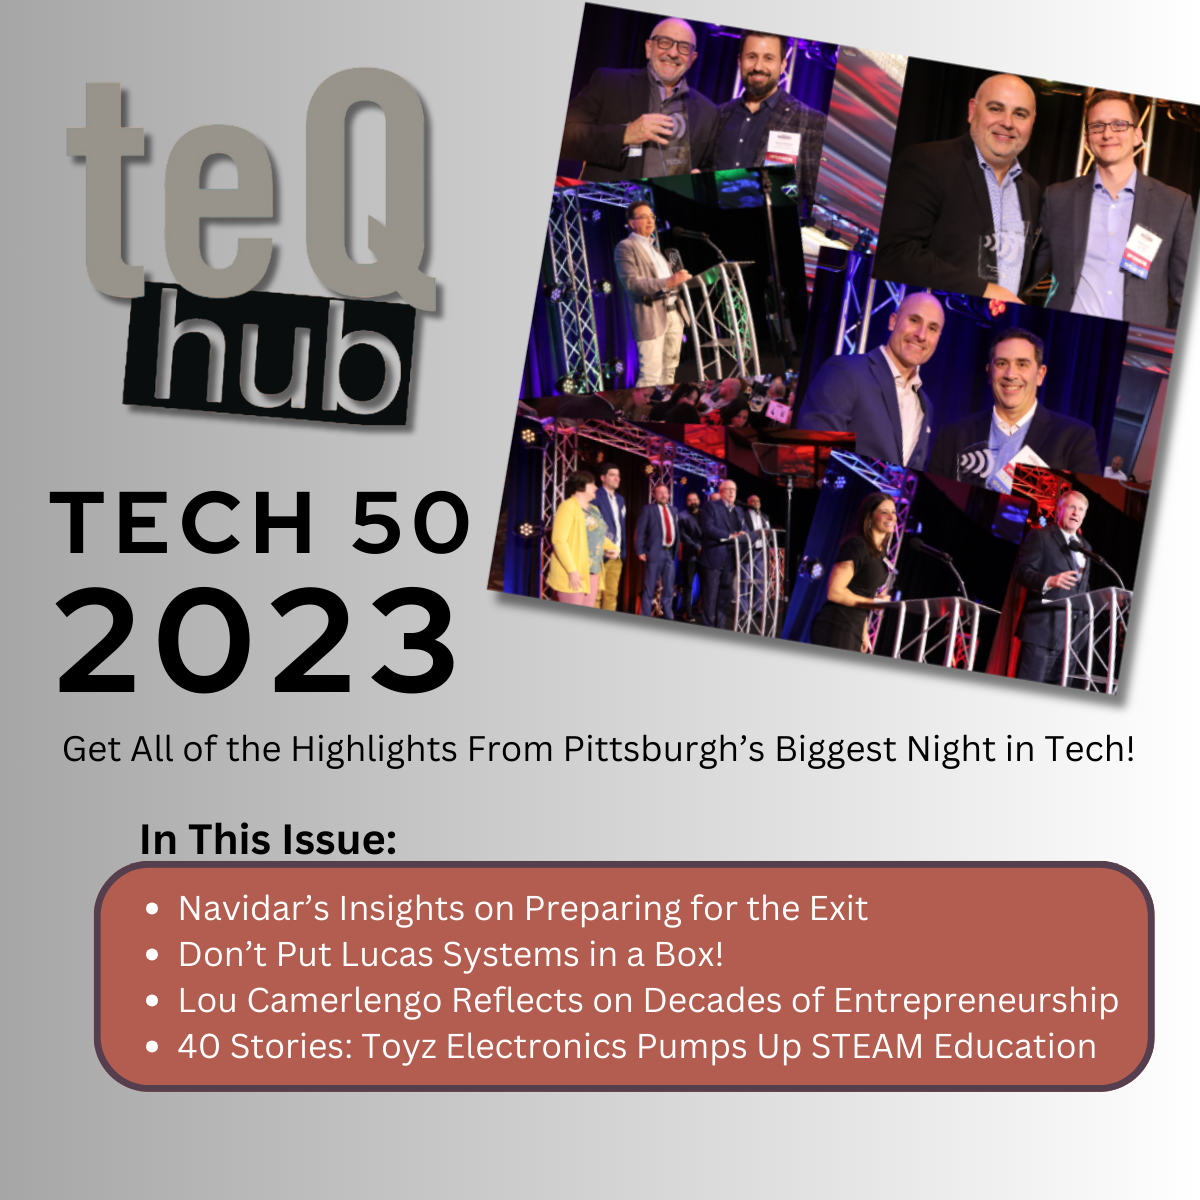 Tech 50 2023 TEQ Hub